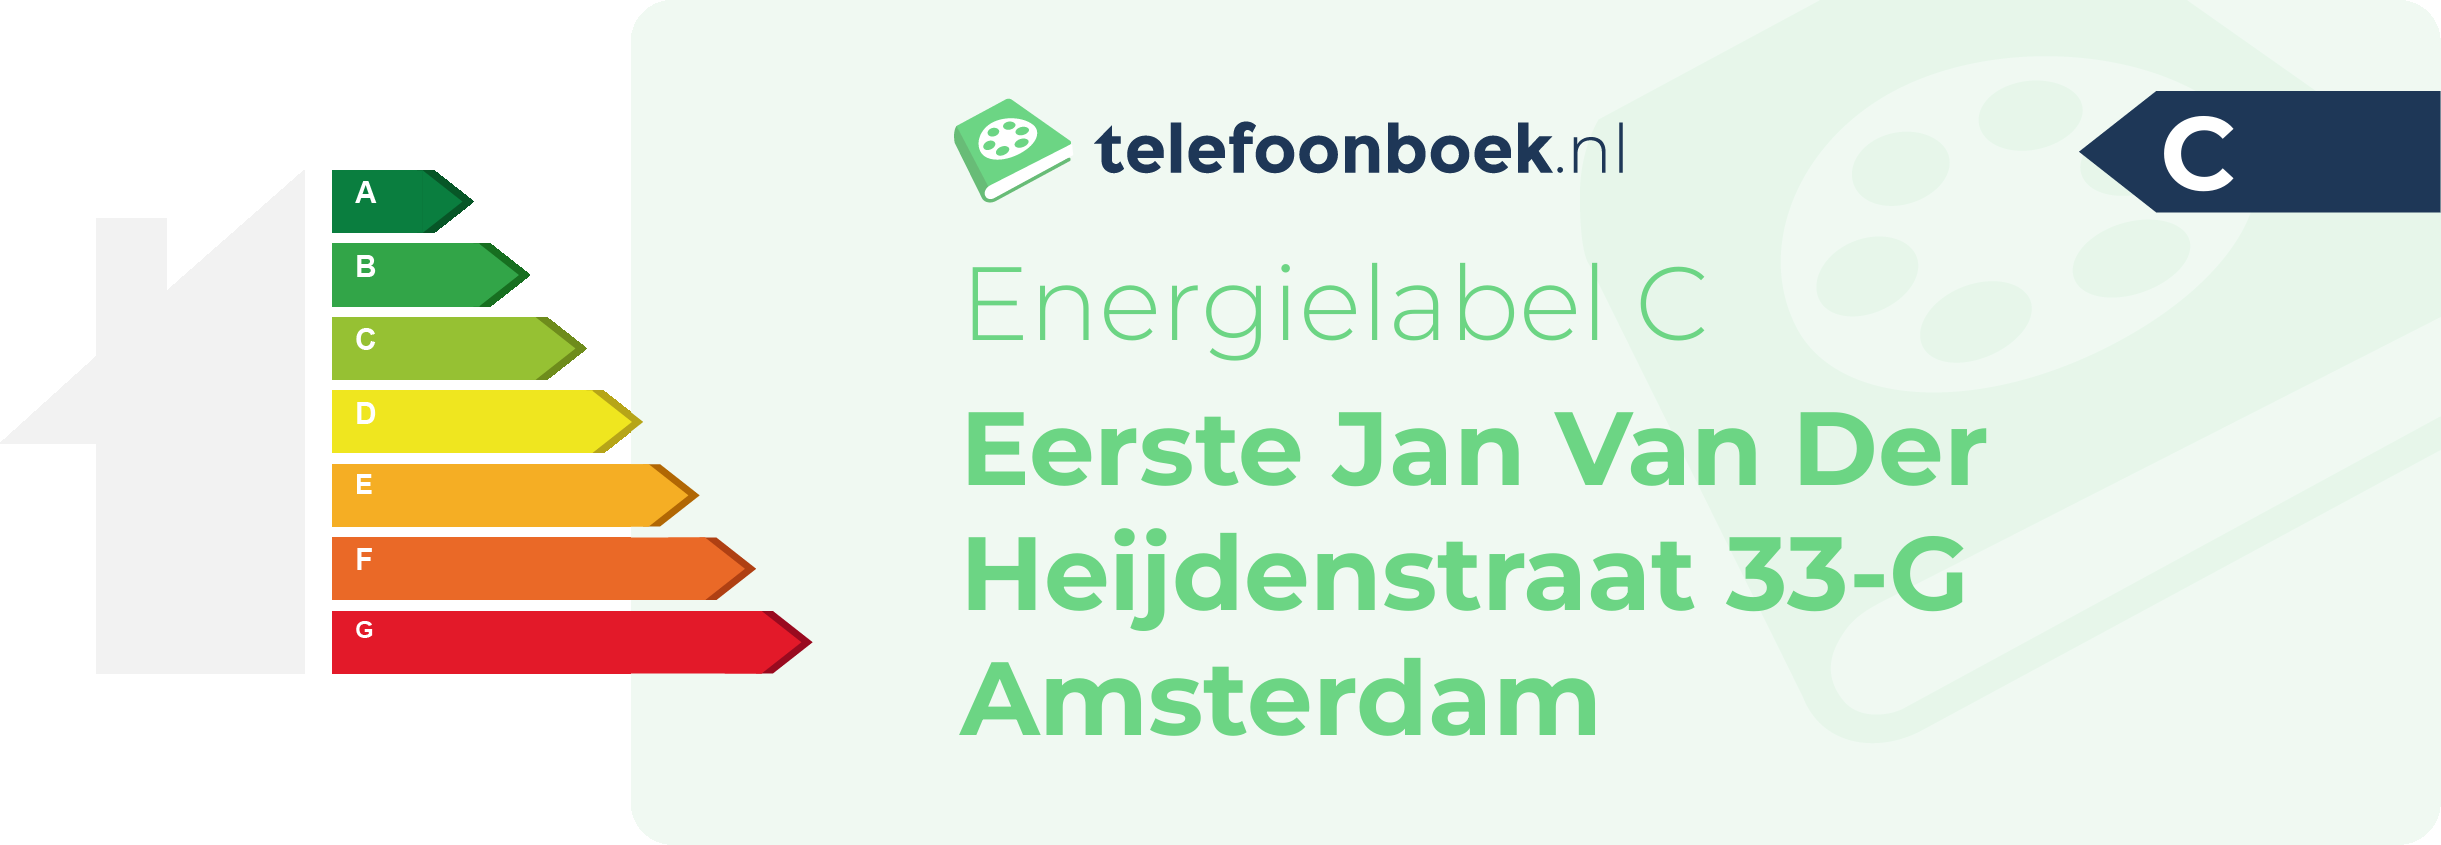 Energielabel Eerste Jan Van Der Heijdenstraat 33-G Amsterdam